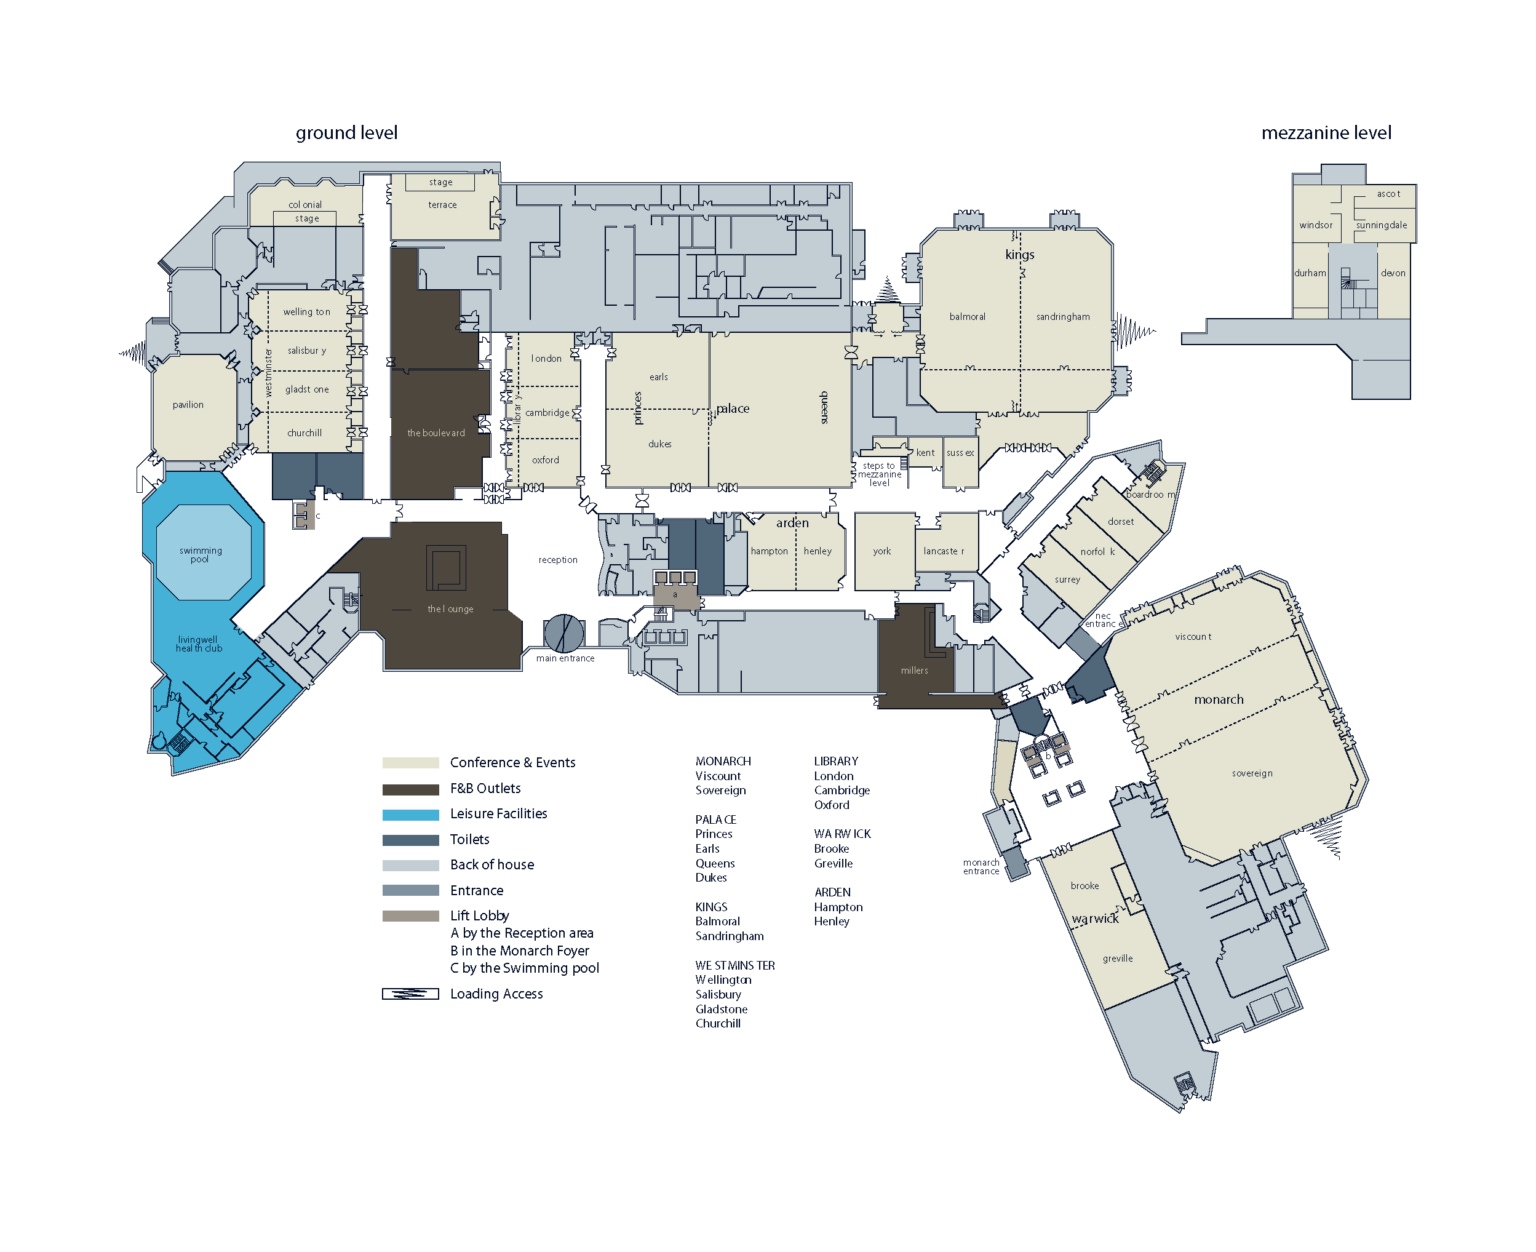 New Ground floor plan 2013